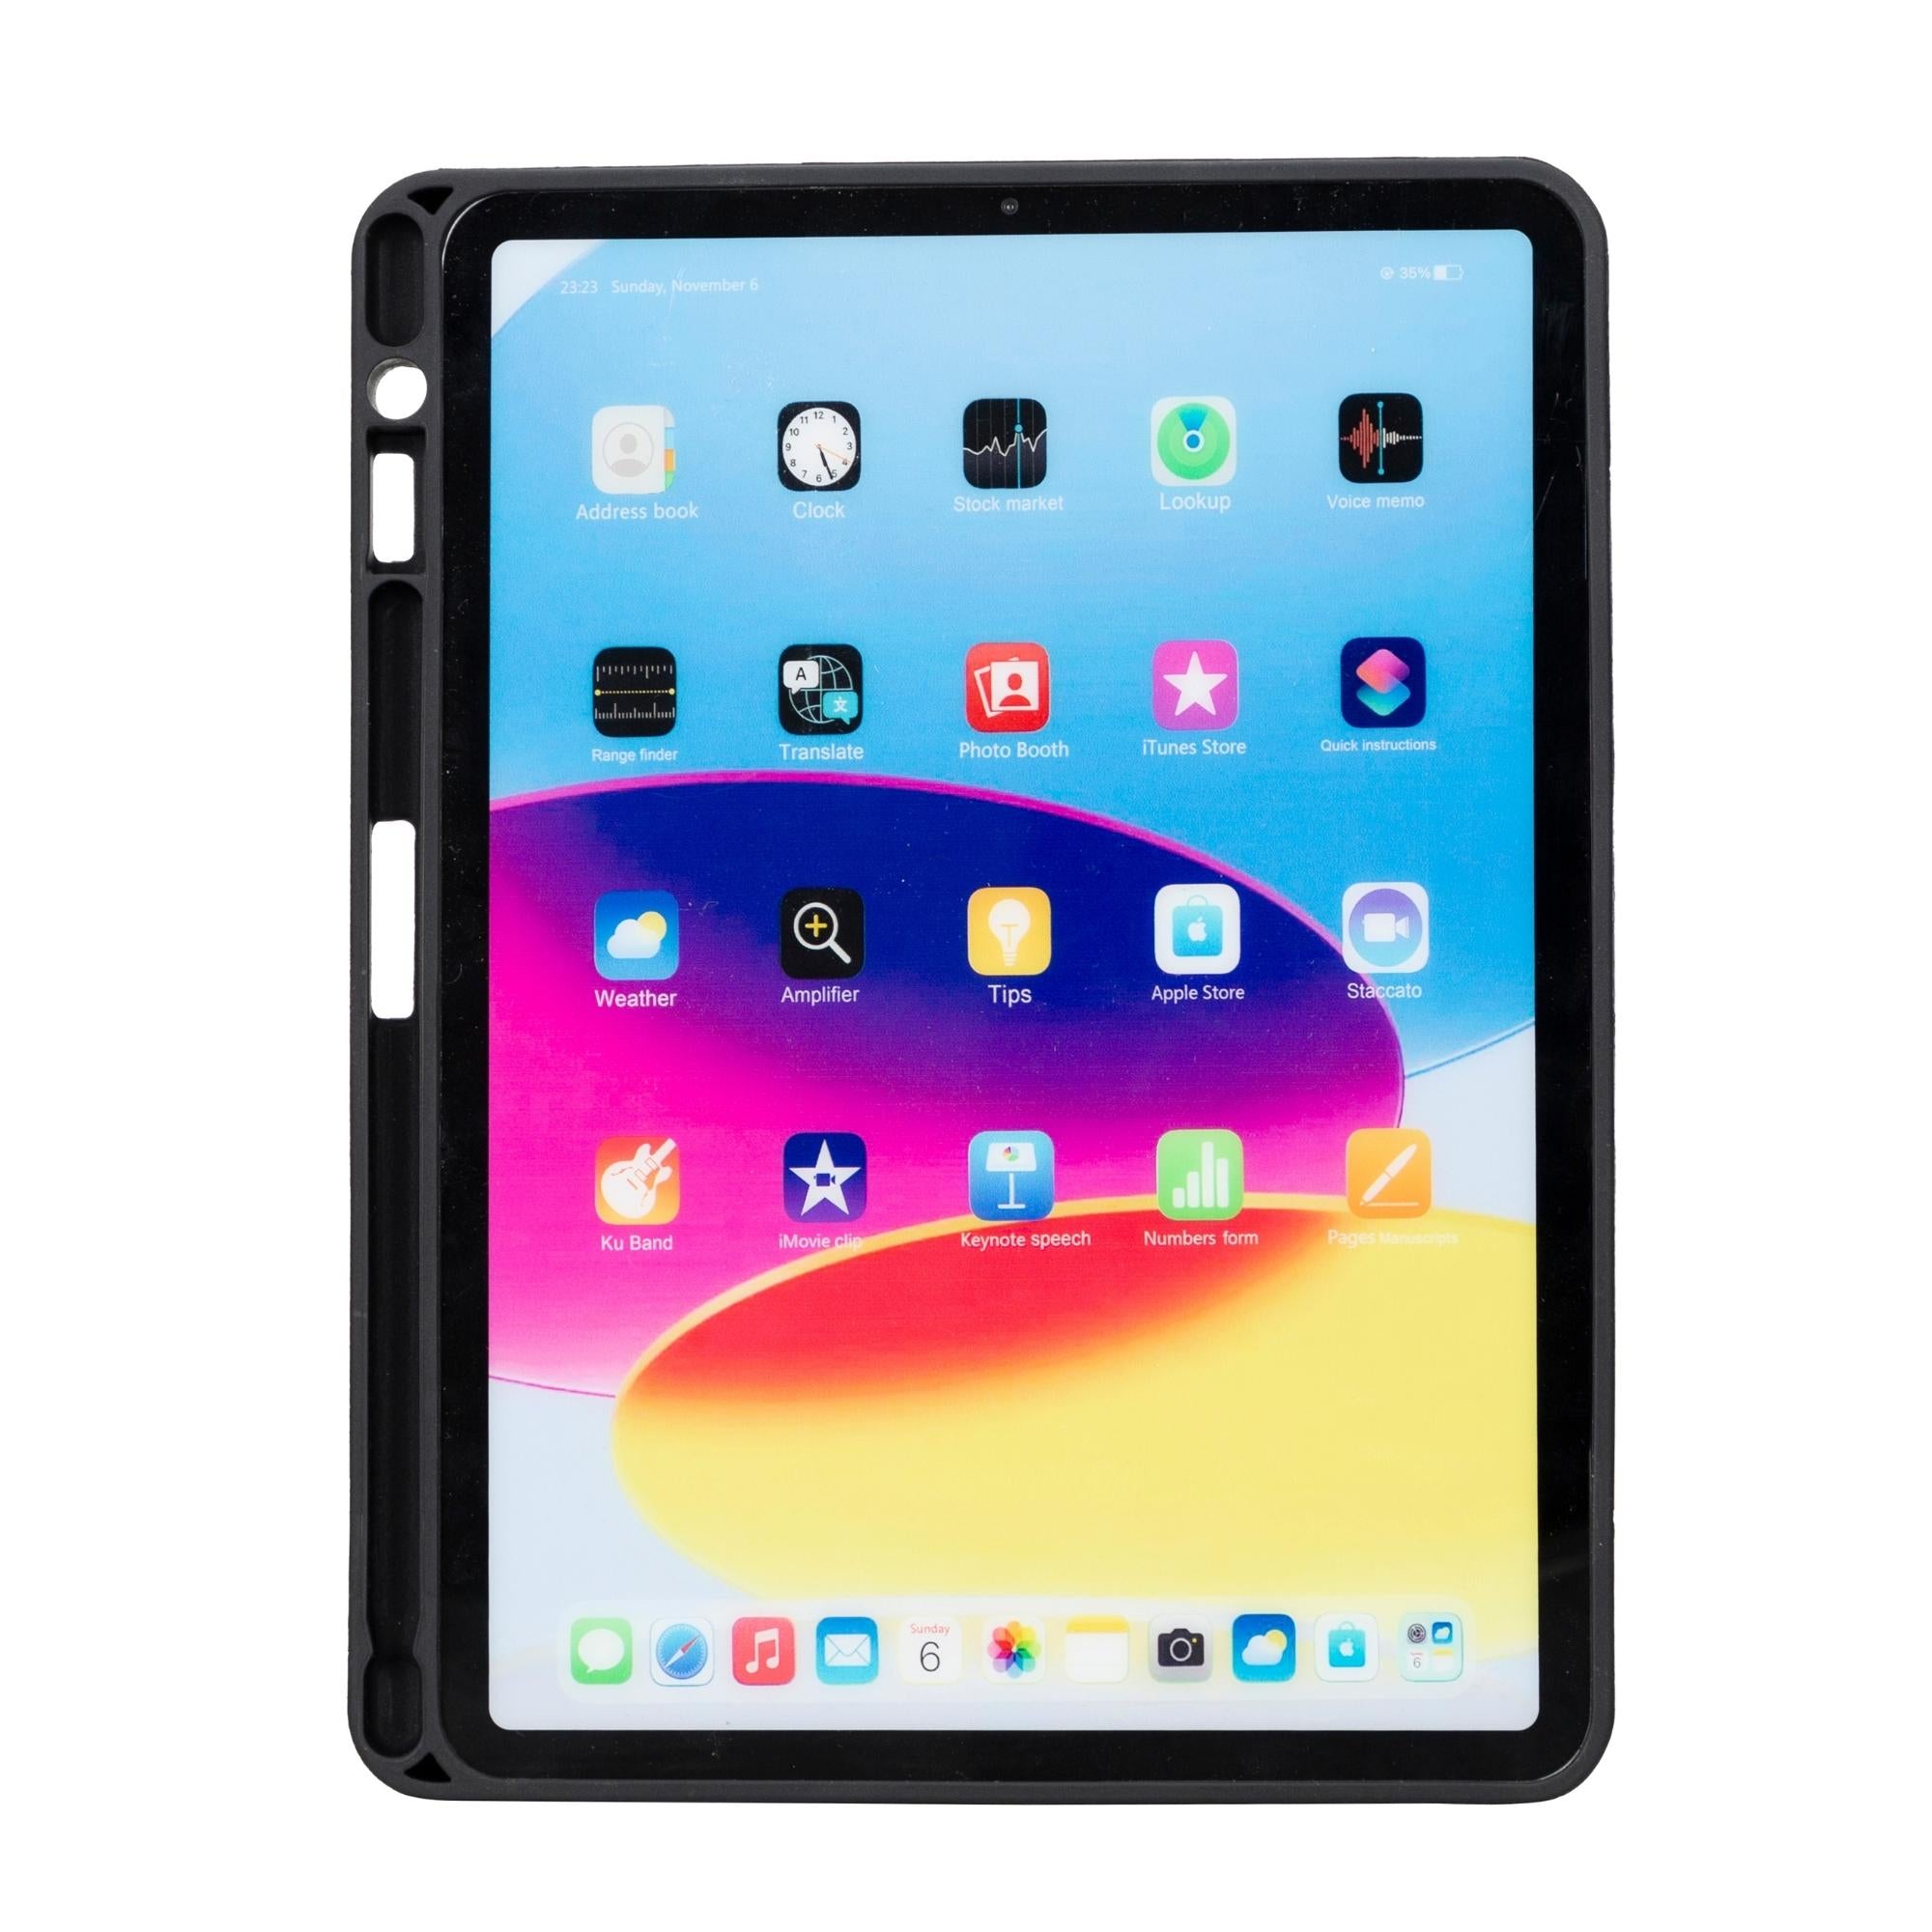 Greybull Leather Case for iPad Mini 8.3-inch - Tan - 6th Generation 8.3 Inch - TORONATA